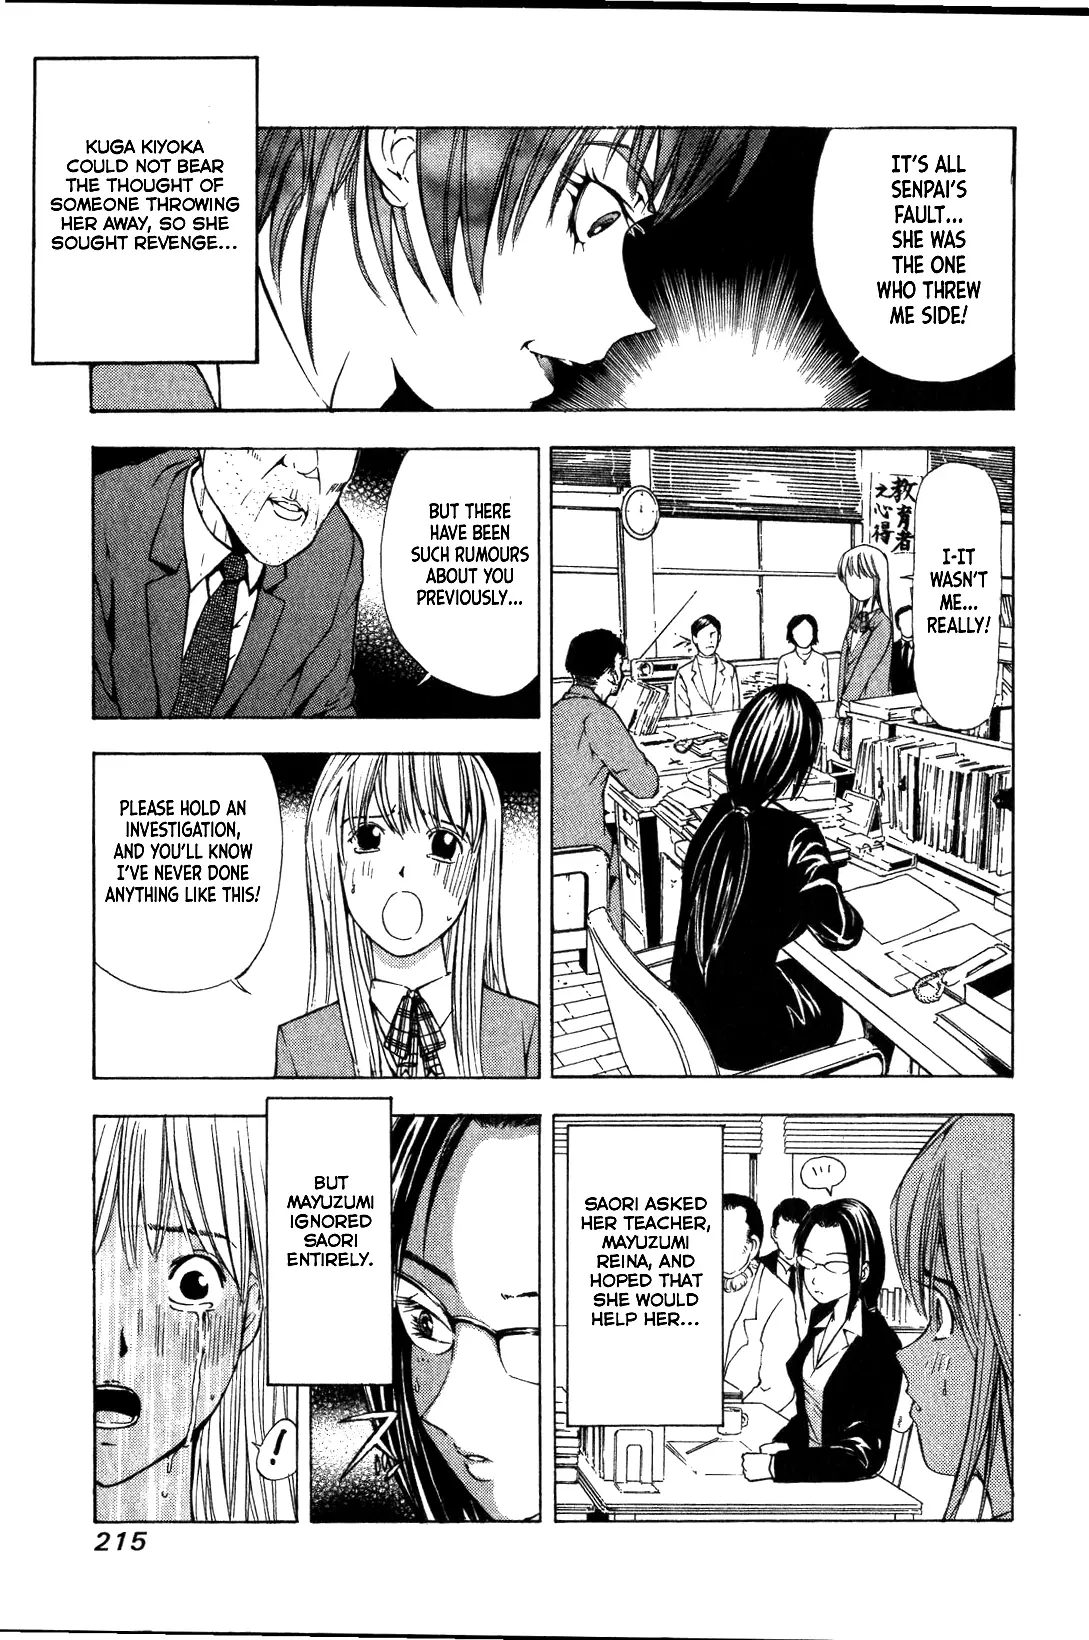 Mystery Minzoku Gakusha Yakumo Itsuki - 28 page 10-9af6eae9